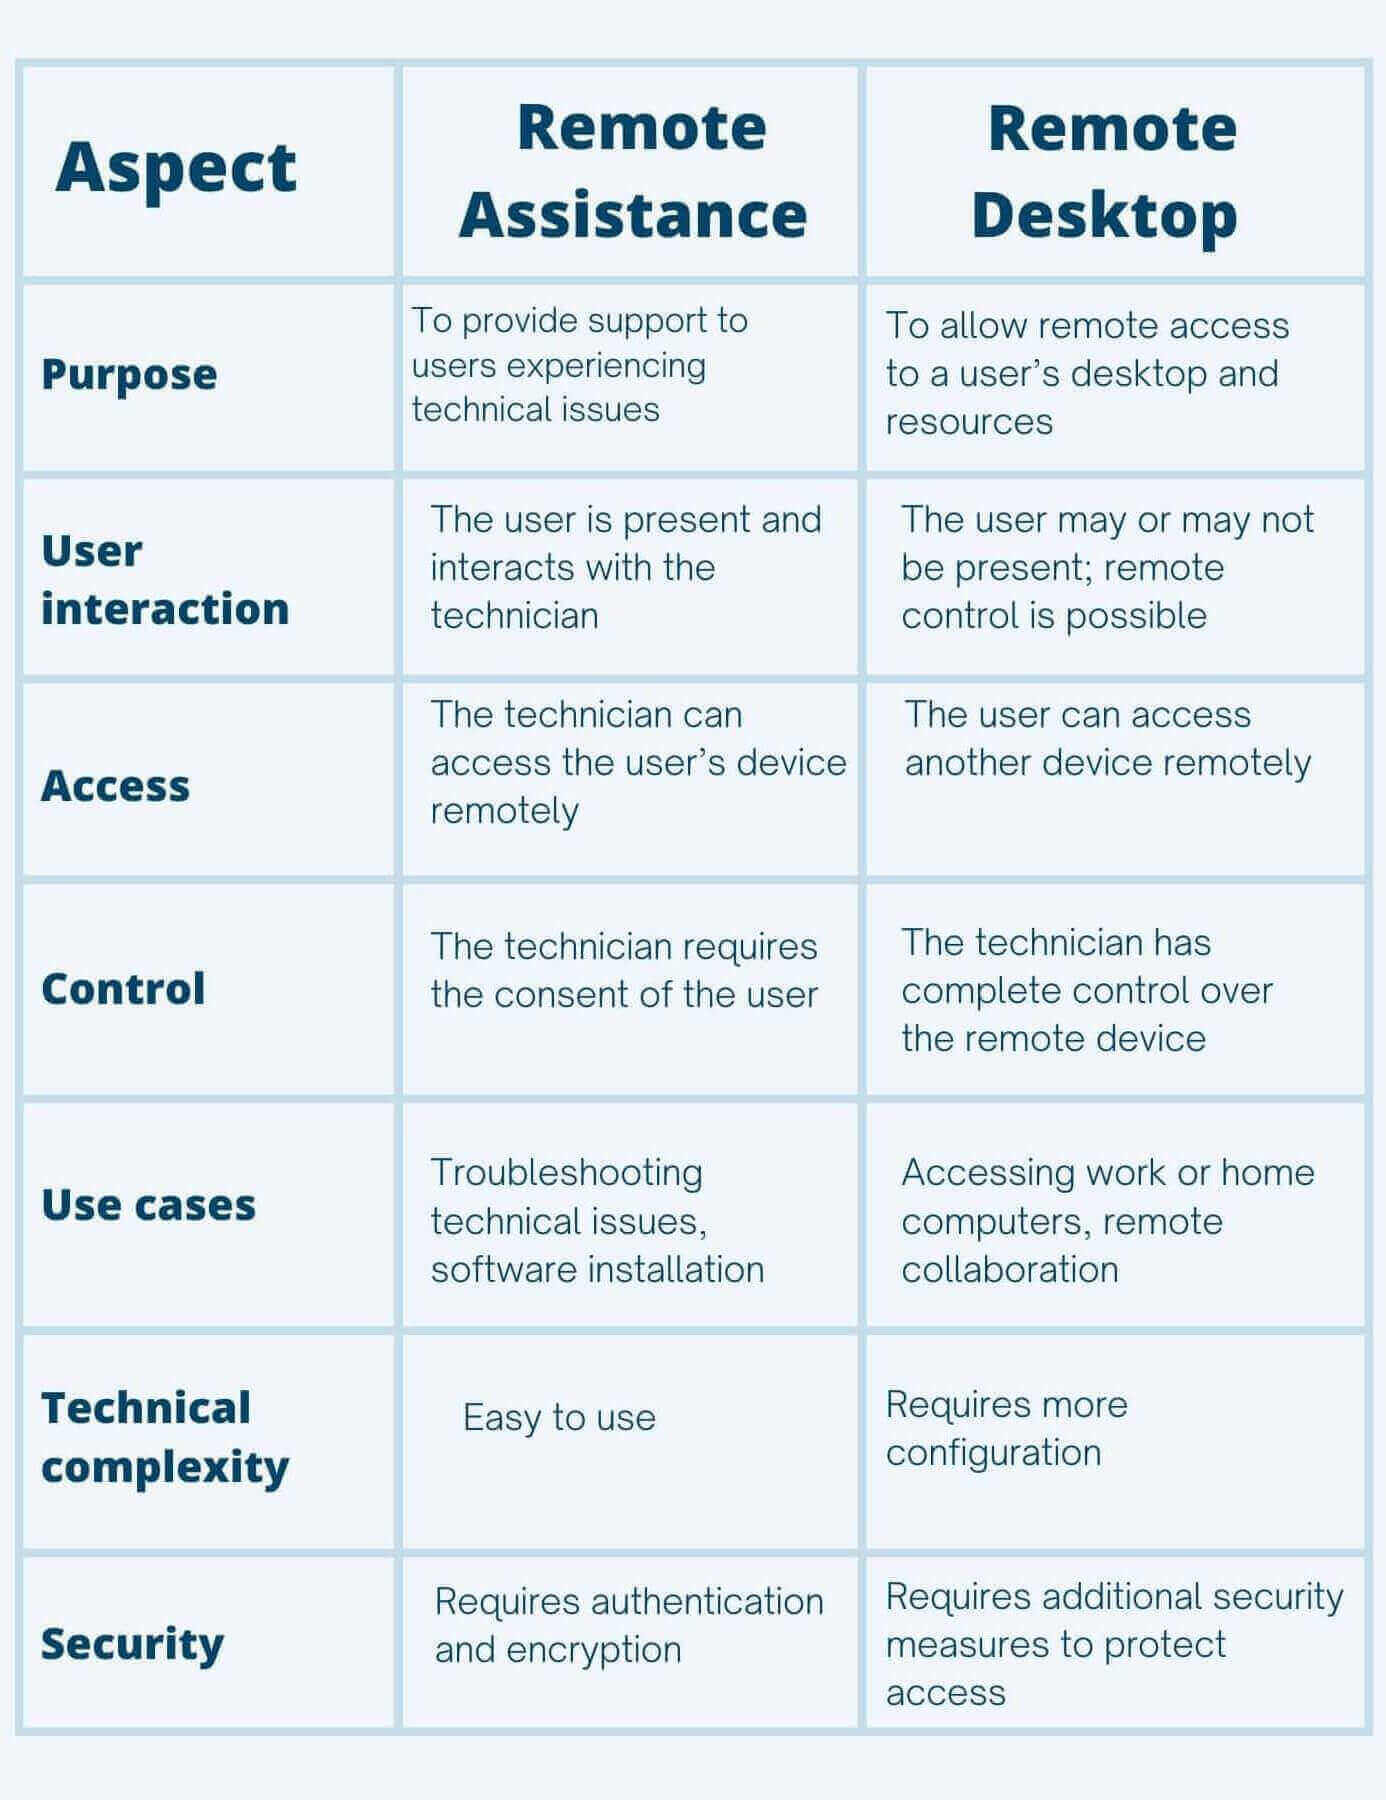 remote assistance vs remote desktop